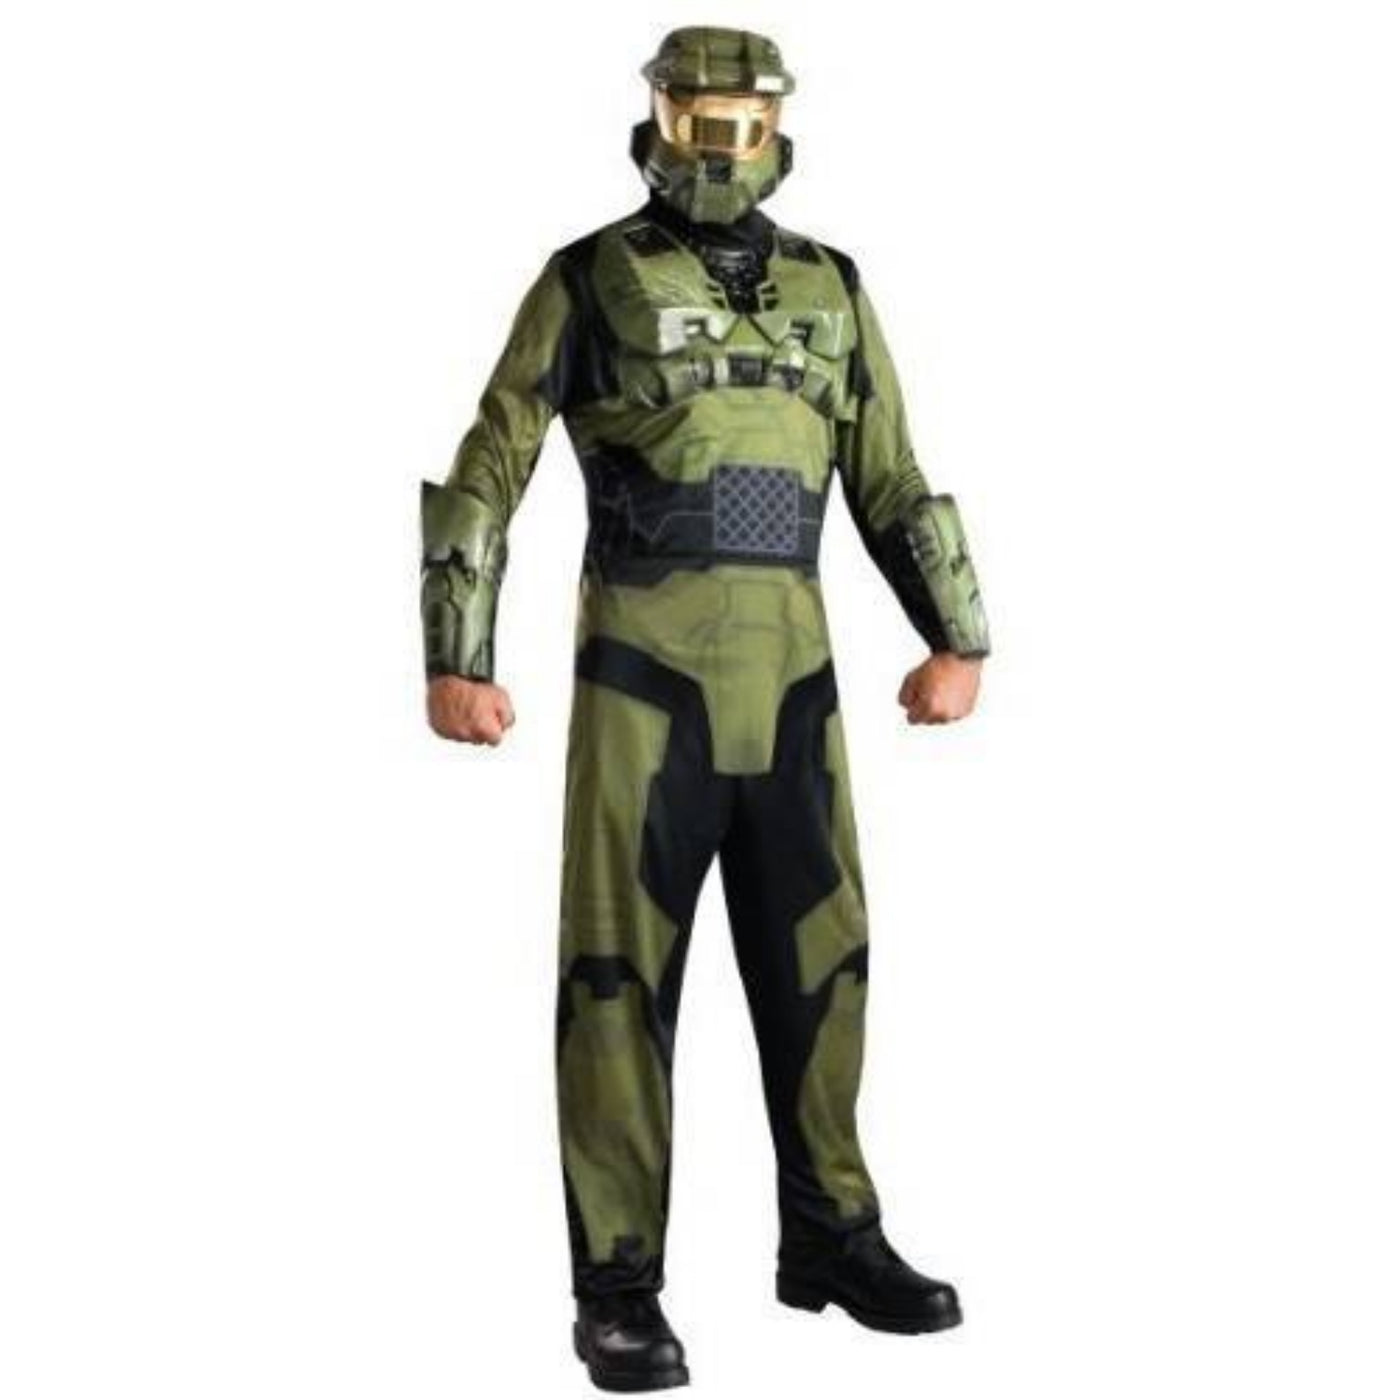 Halo 3 Master Chief Costume